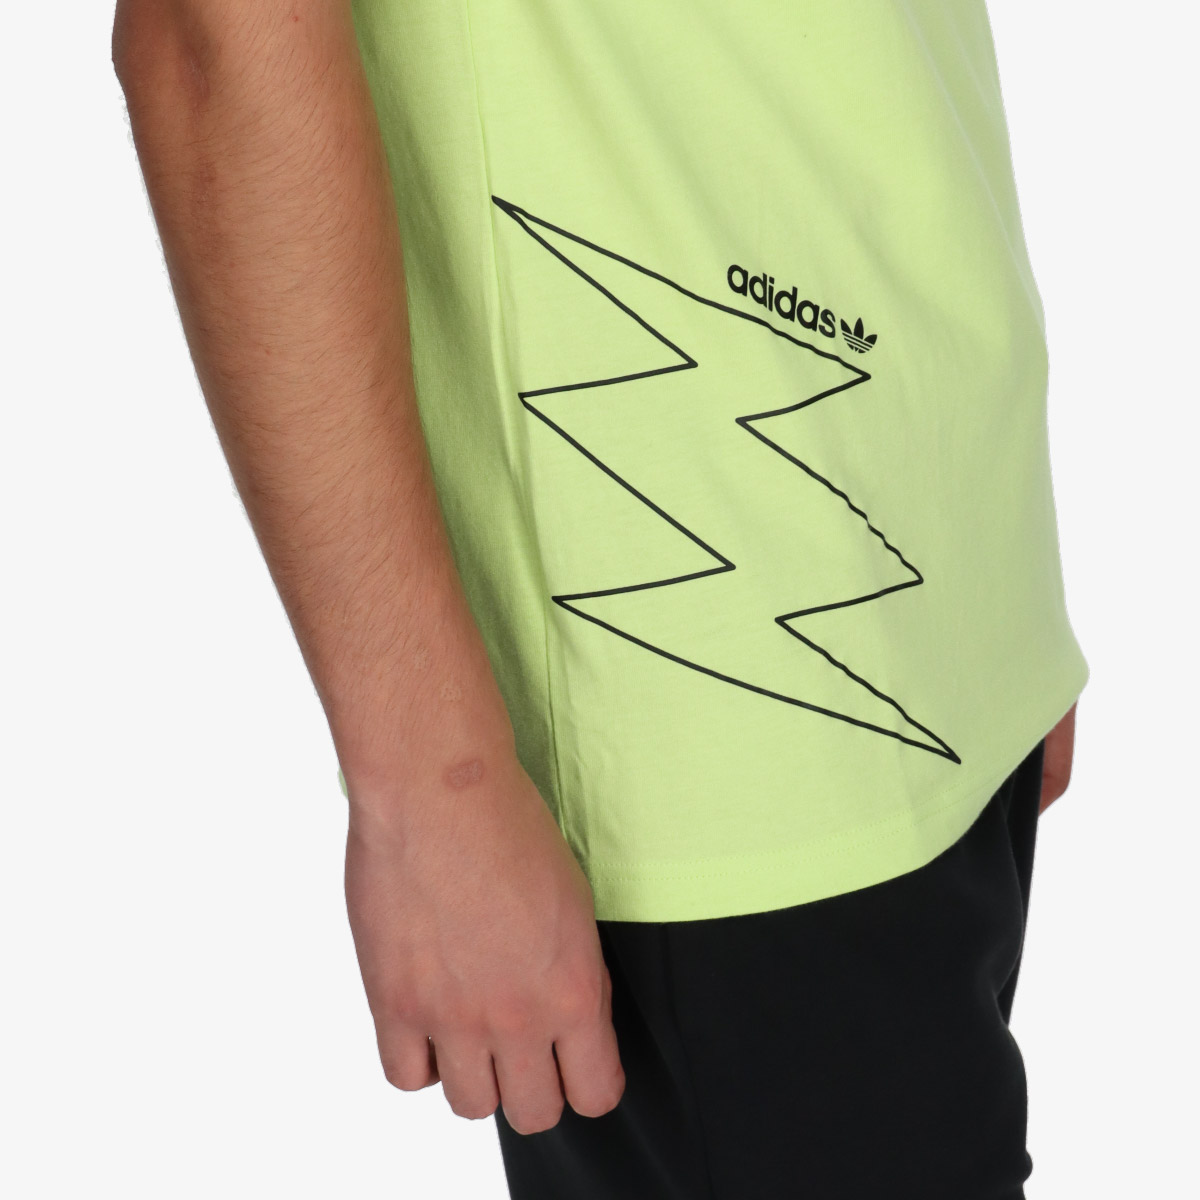 Маица SPRT Lightning T-Shirt 